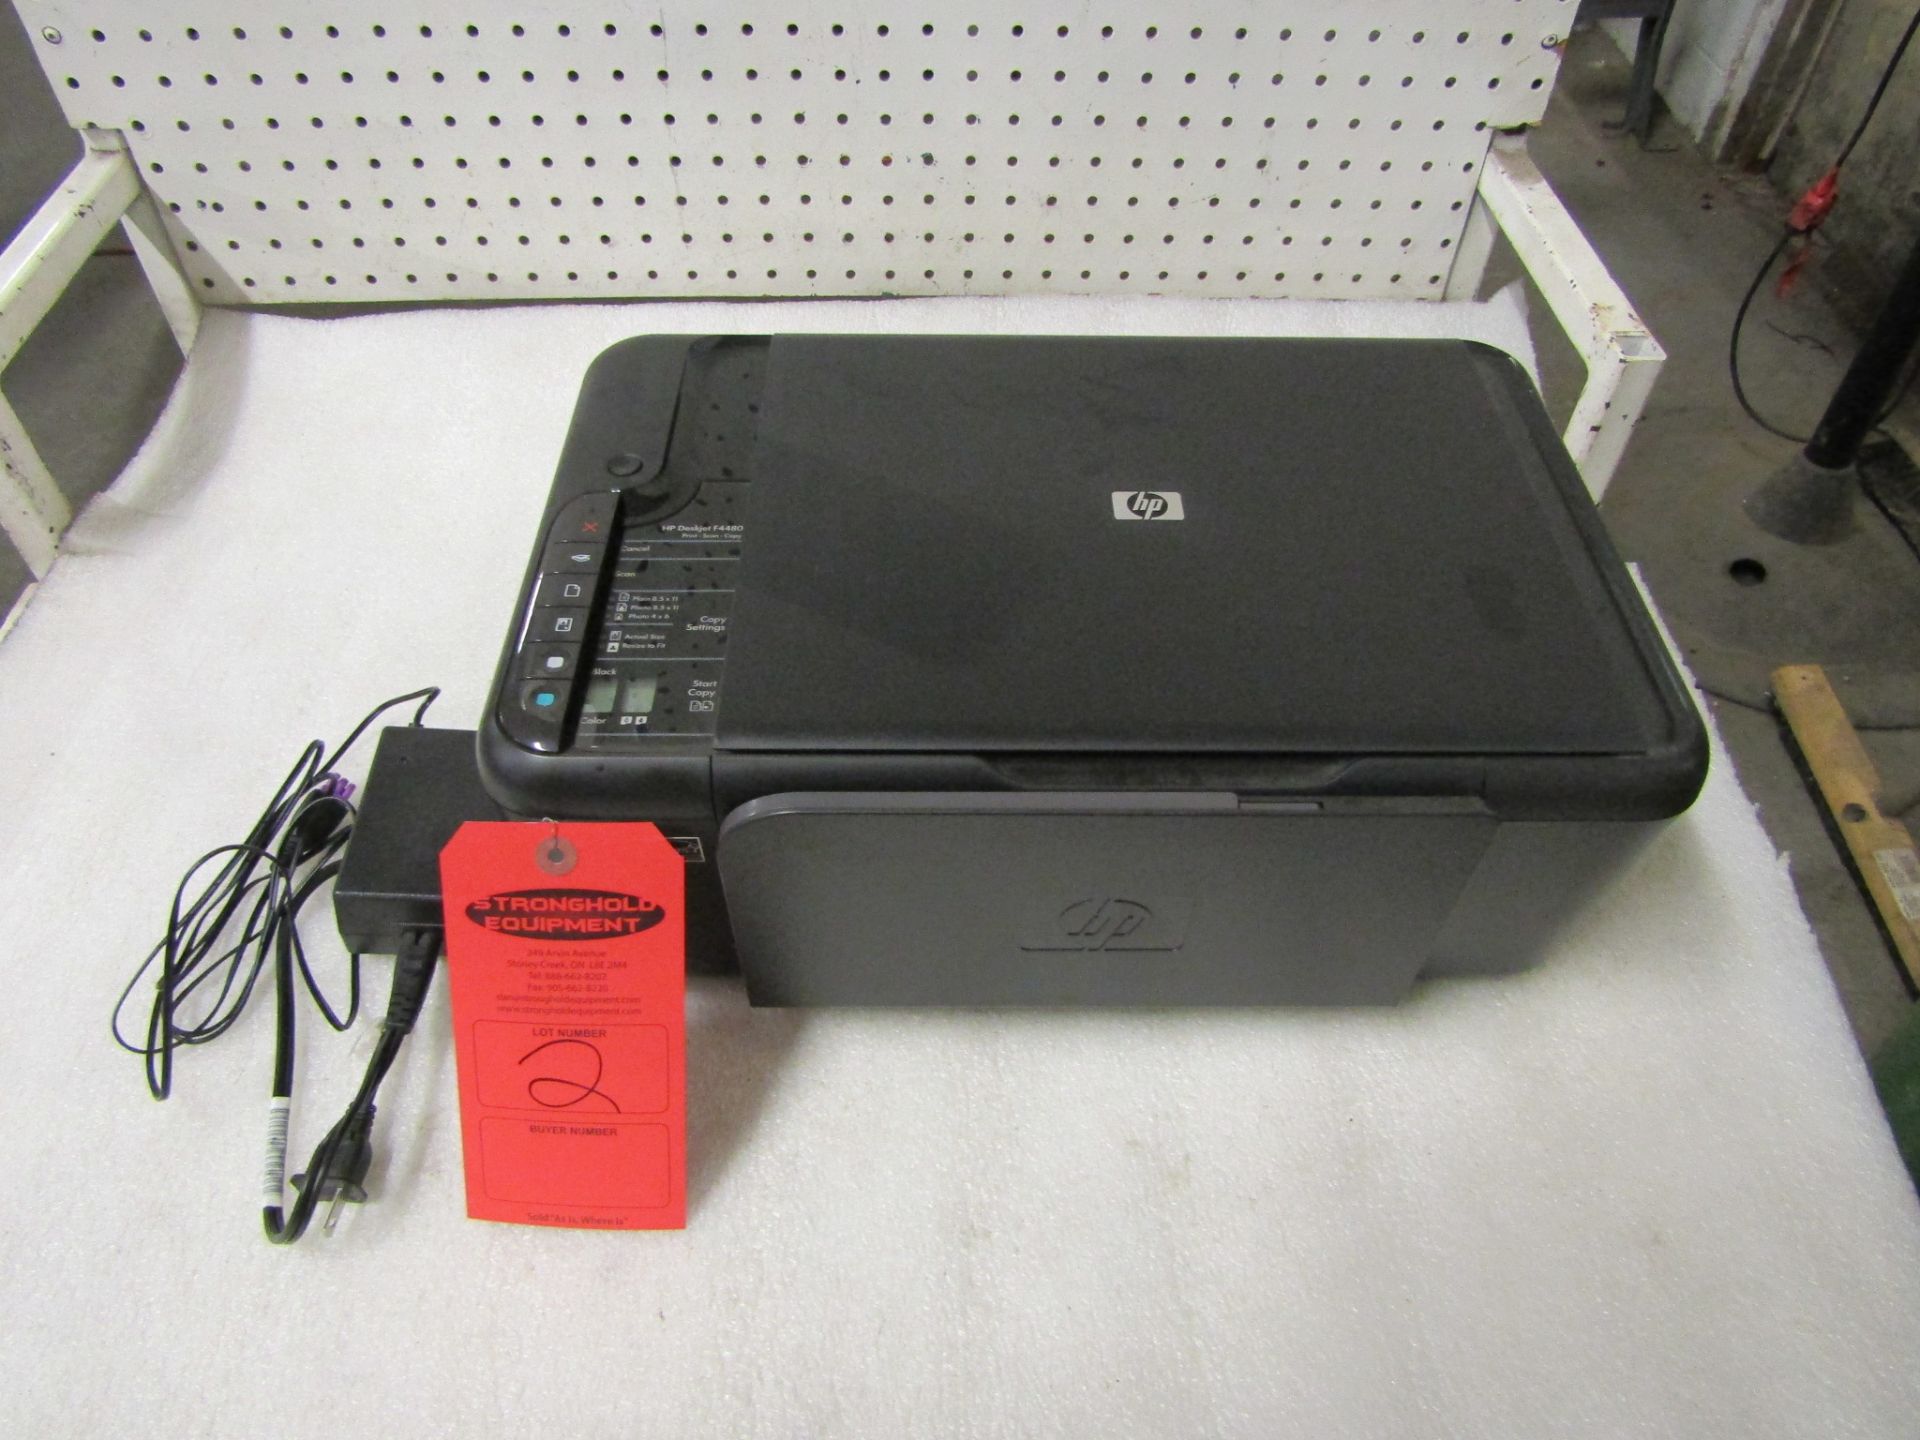 HP Deskjet F4480 Printer with 2 ink cartridge system - print / scan / copy - Image 2 of 2